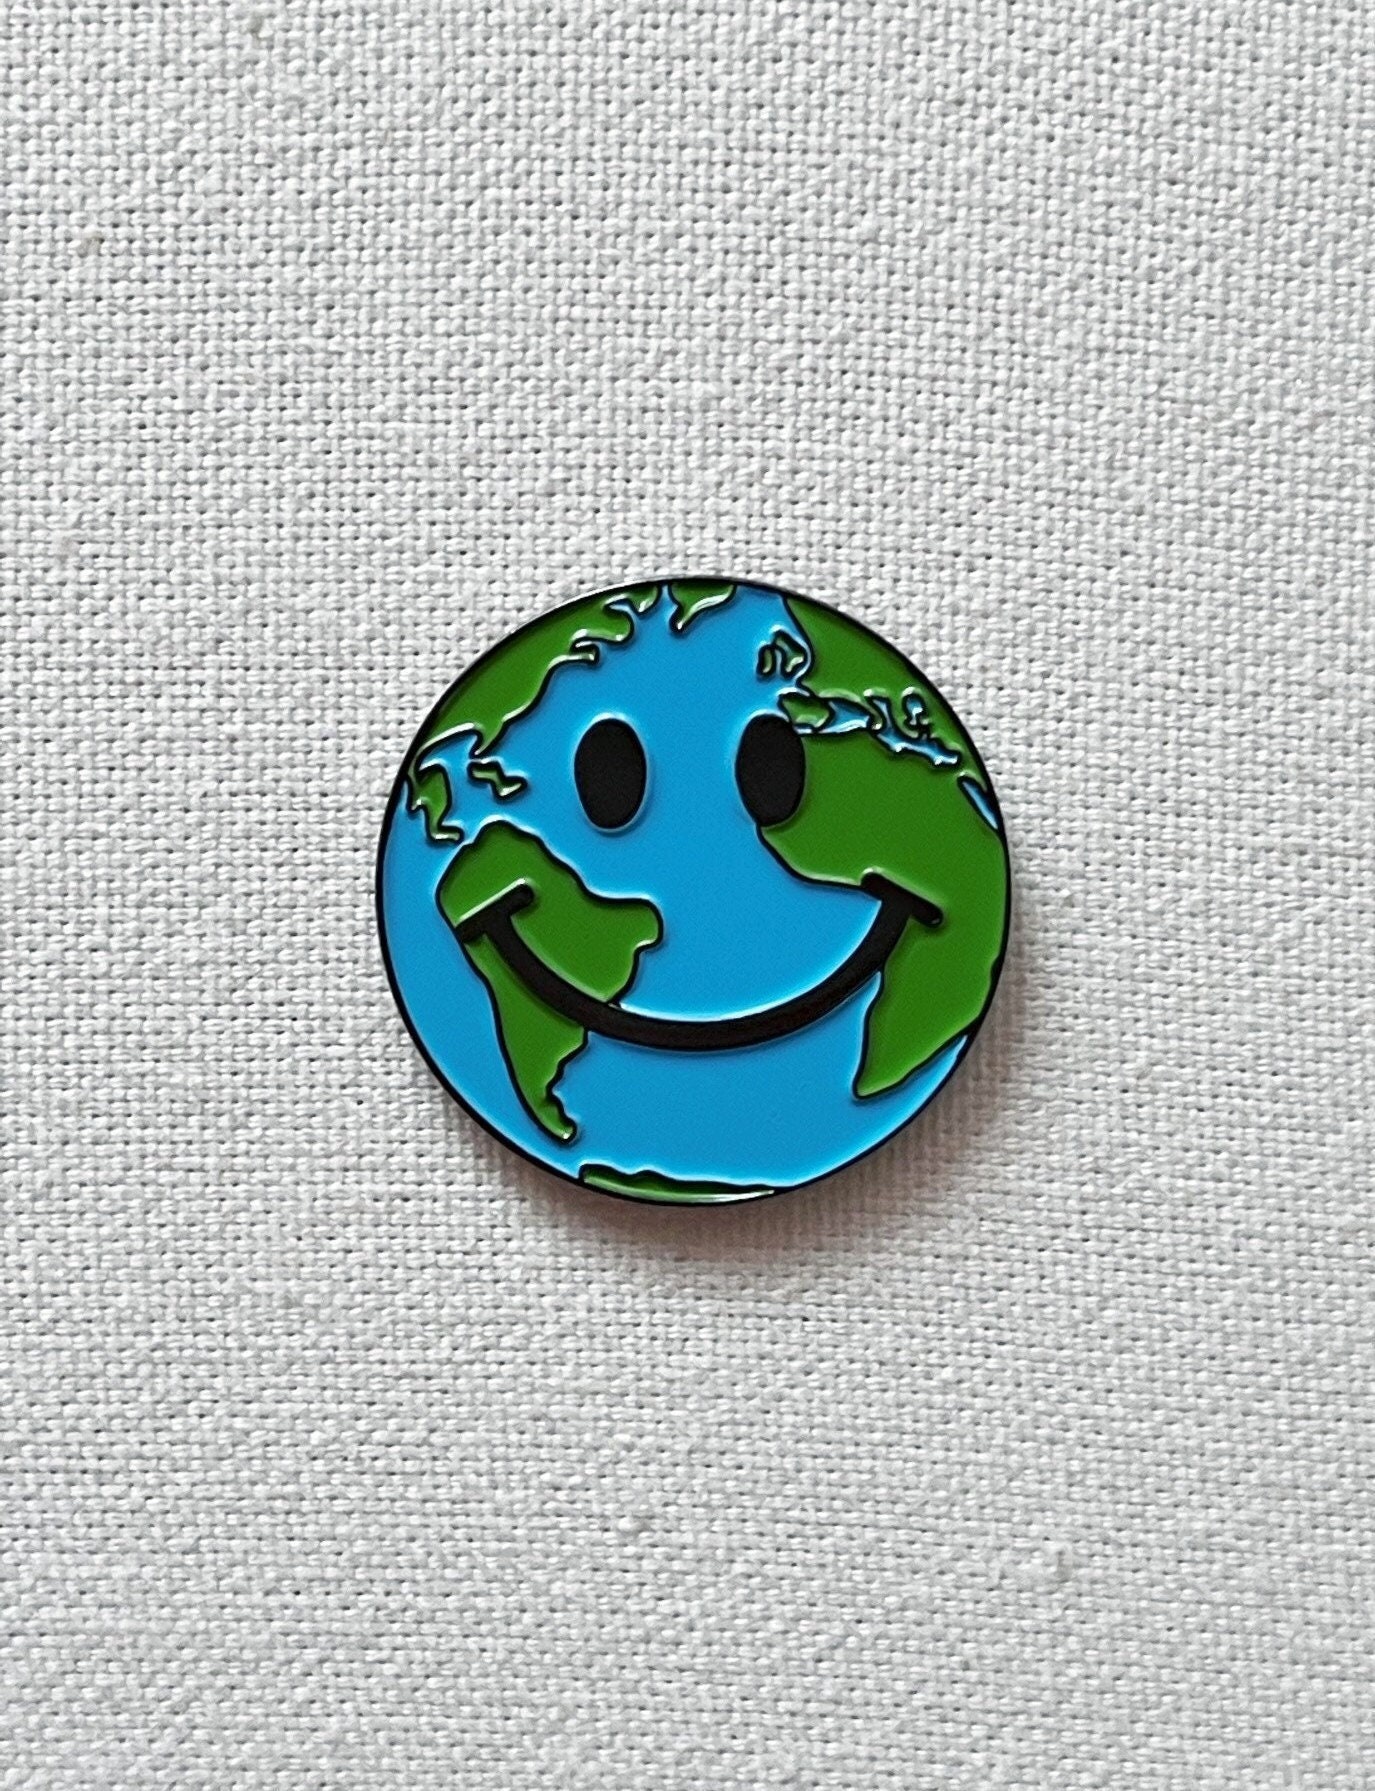 Planet Erde Smiley Metall Emaille Pin Anstecker von CosyIslandLiving